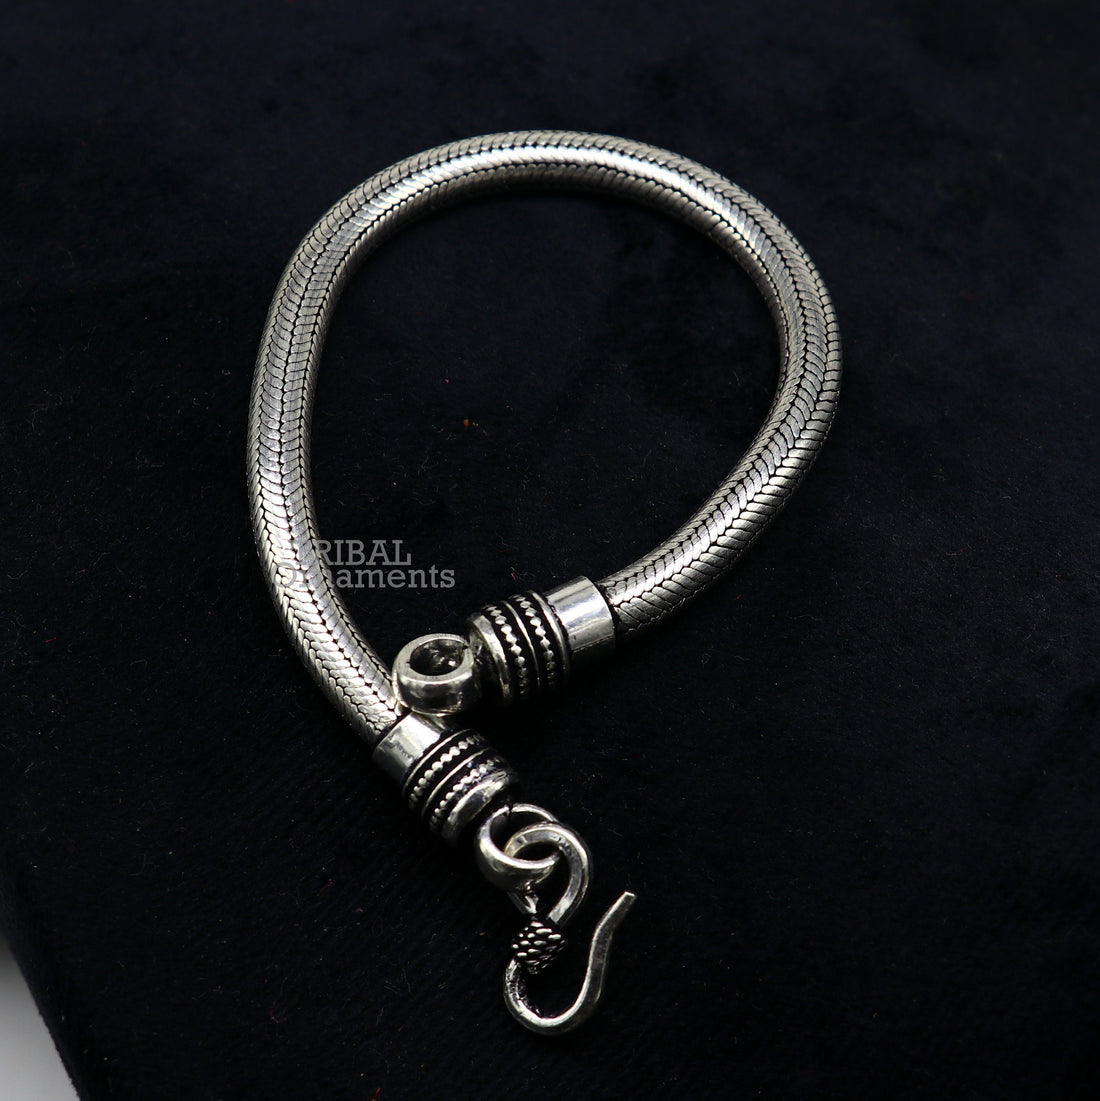 6MM Solid 925 sterling silver handmade amazing snake chain flexible unisex bracelet jewelry elegant custom wrist belt bracelet india sb371 - TRIBAL ORNAMENTS